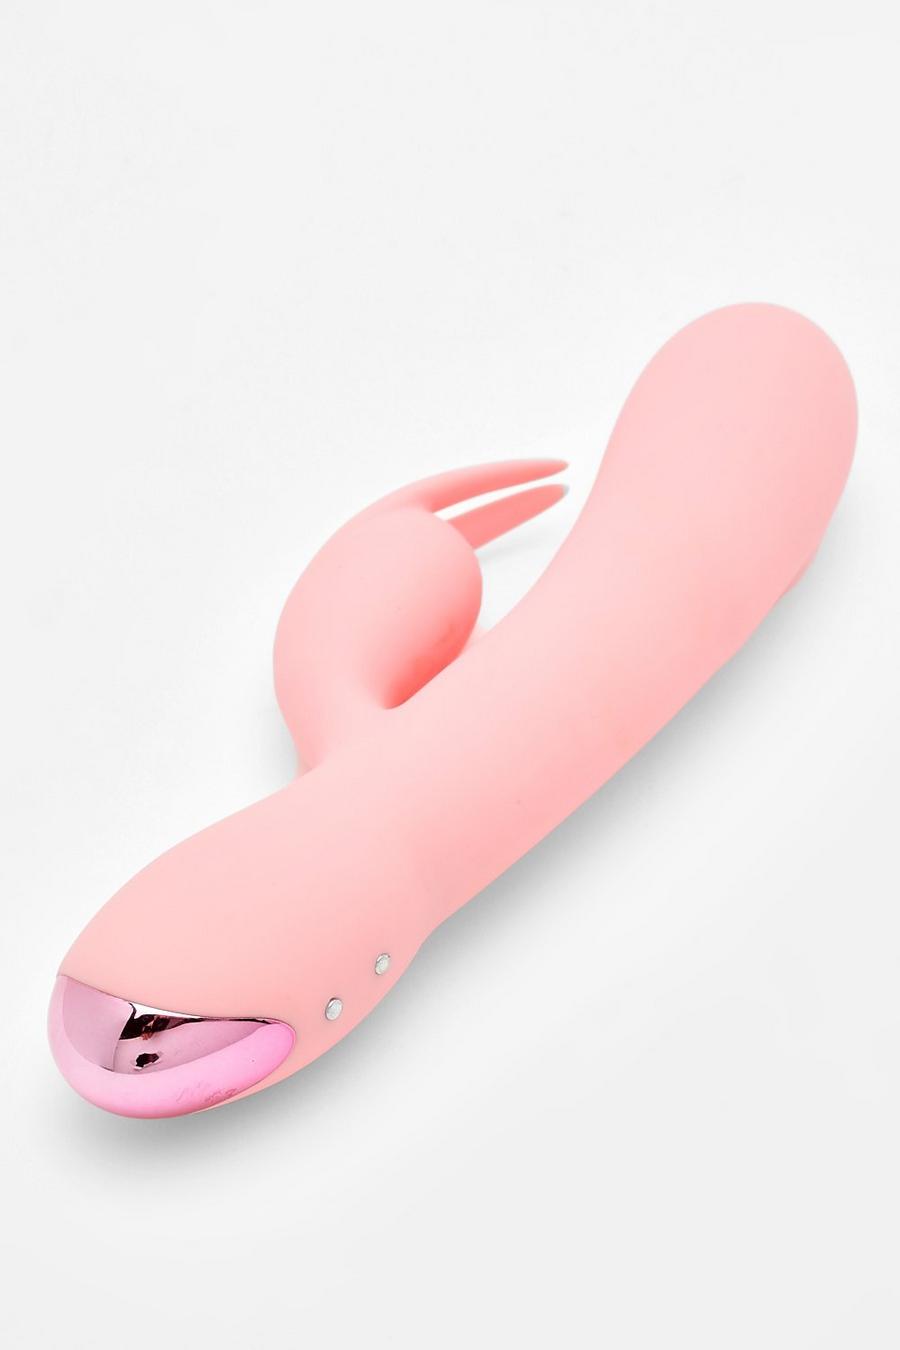 Blush pink Rabbit Vibrator